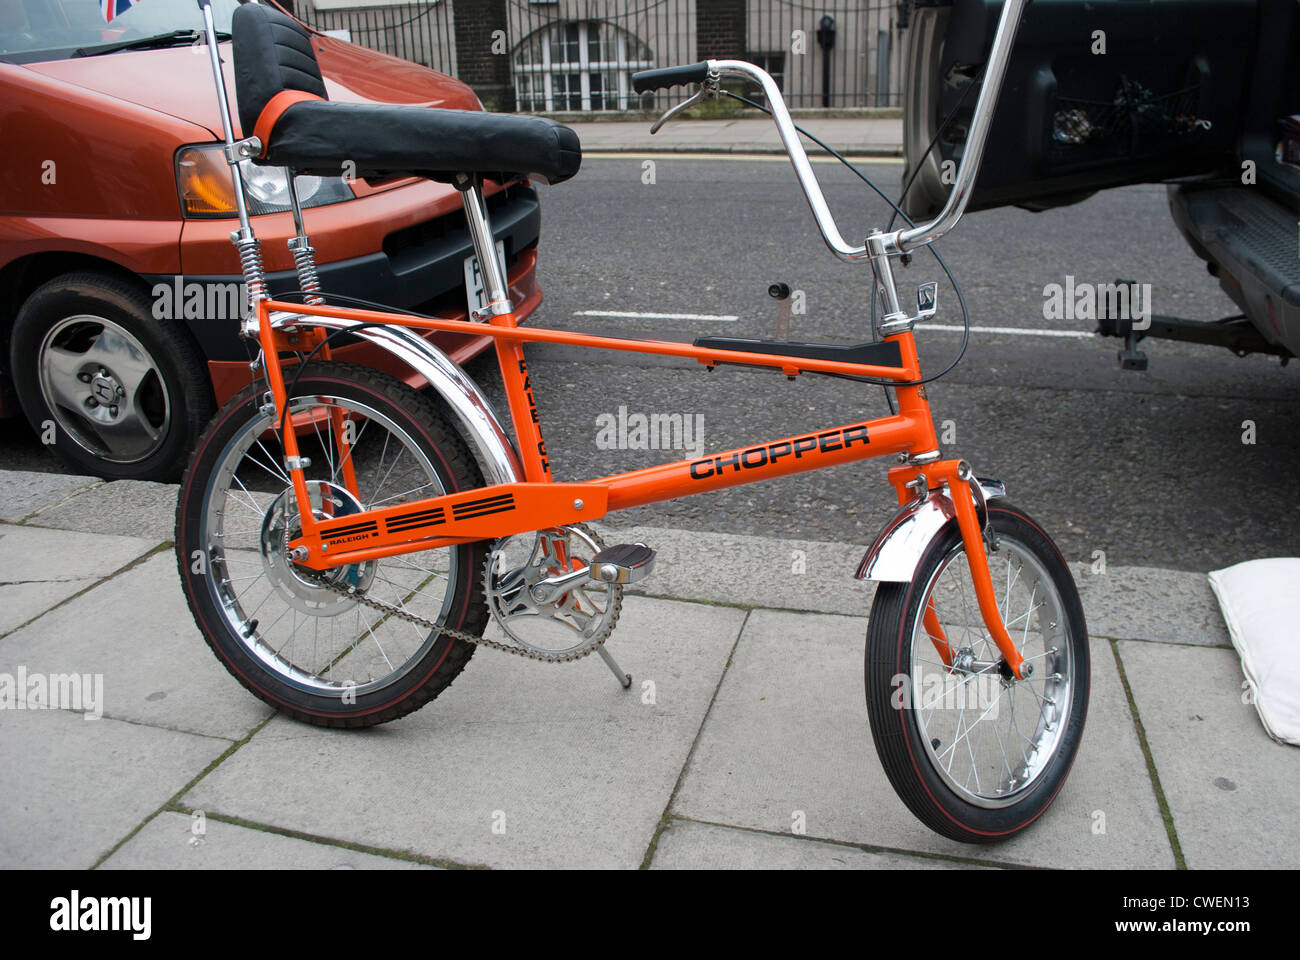 orange chopper bicycle